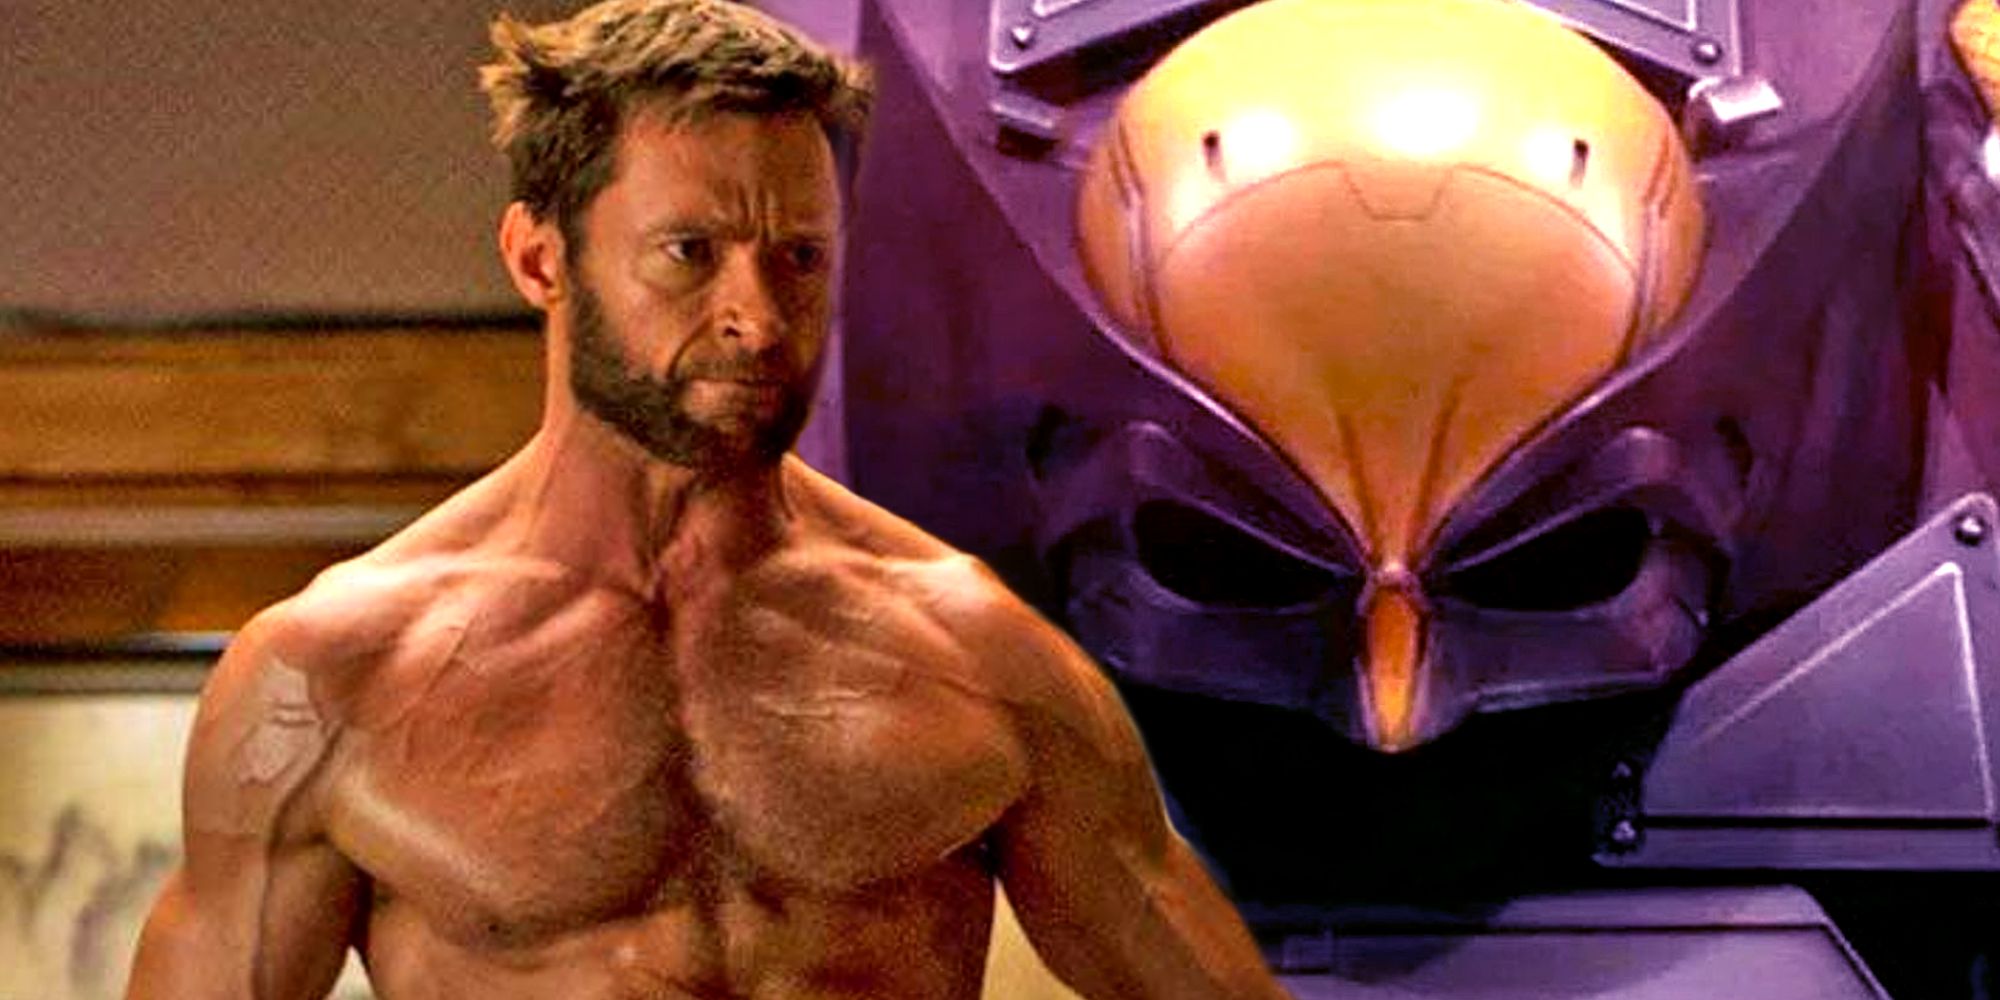 Shirtless Hugh Jackman as Wolverine and Logan's Classic Comic Book Costume